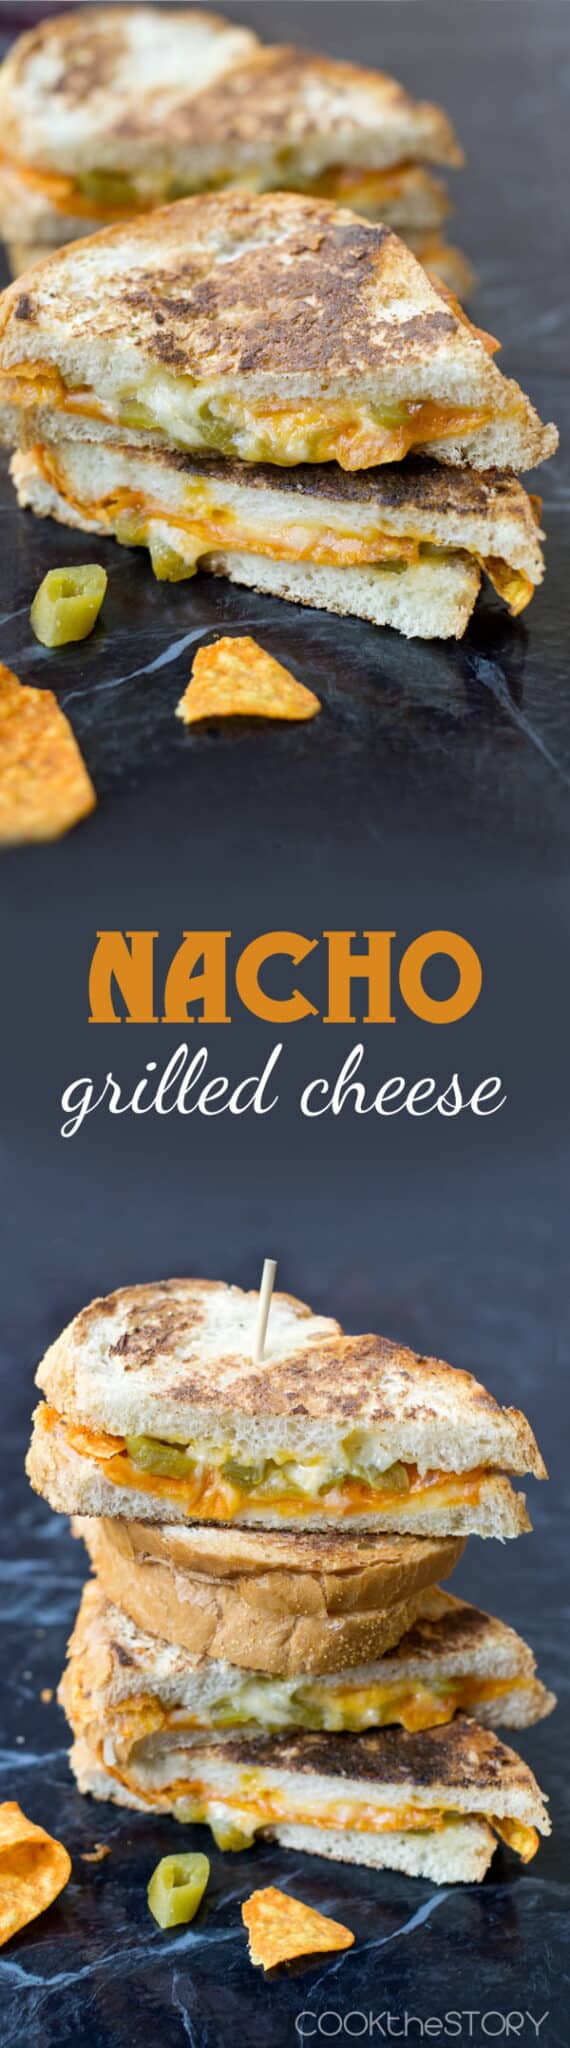 Nacho Grilled Cheese Sandwich